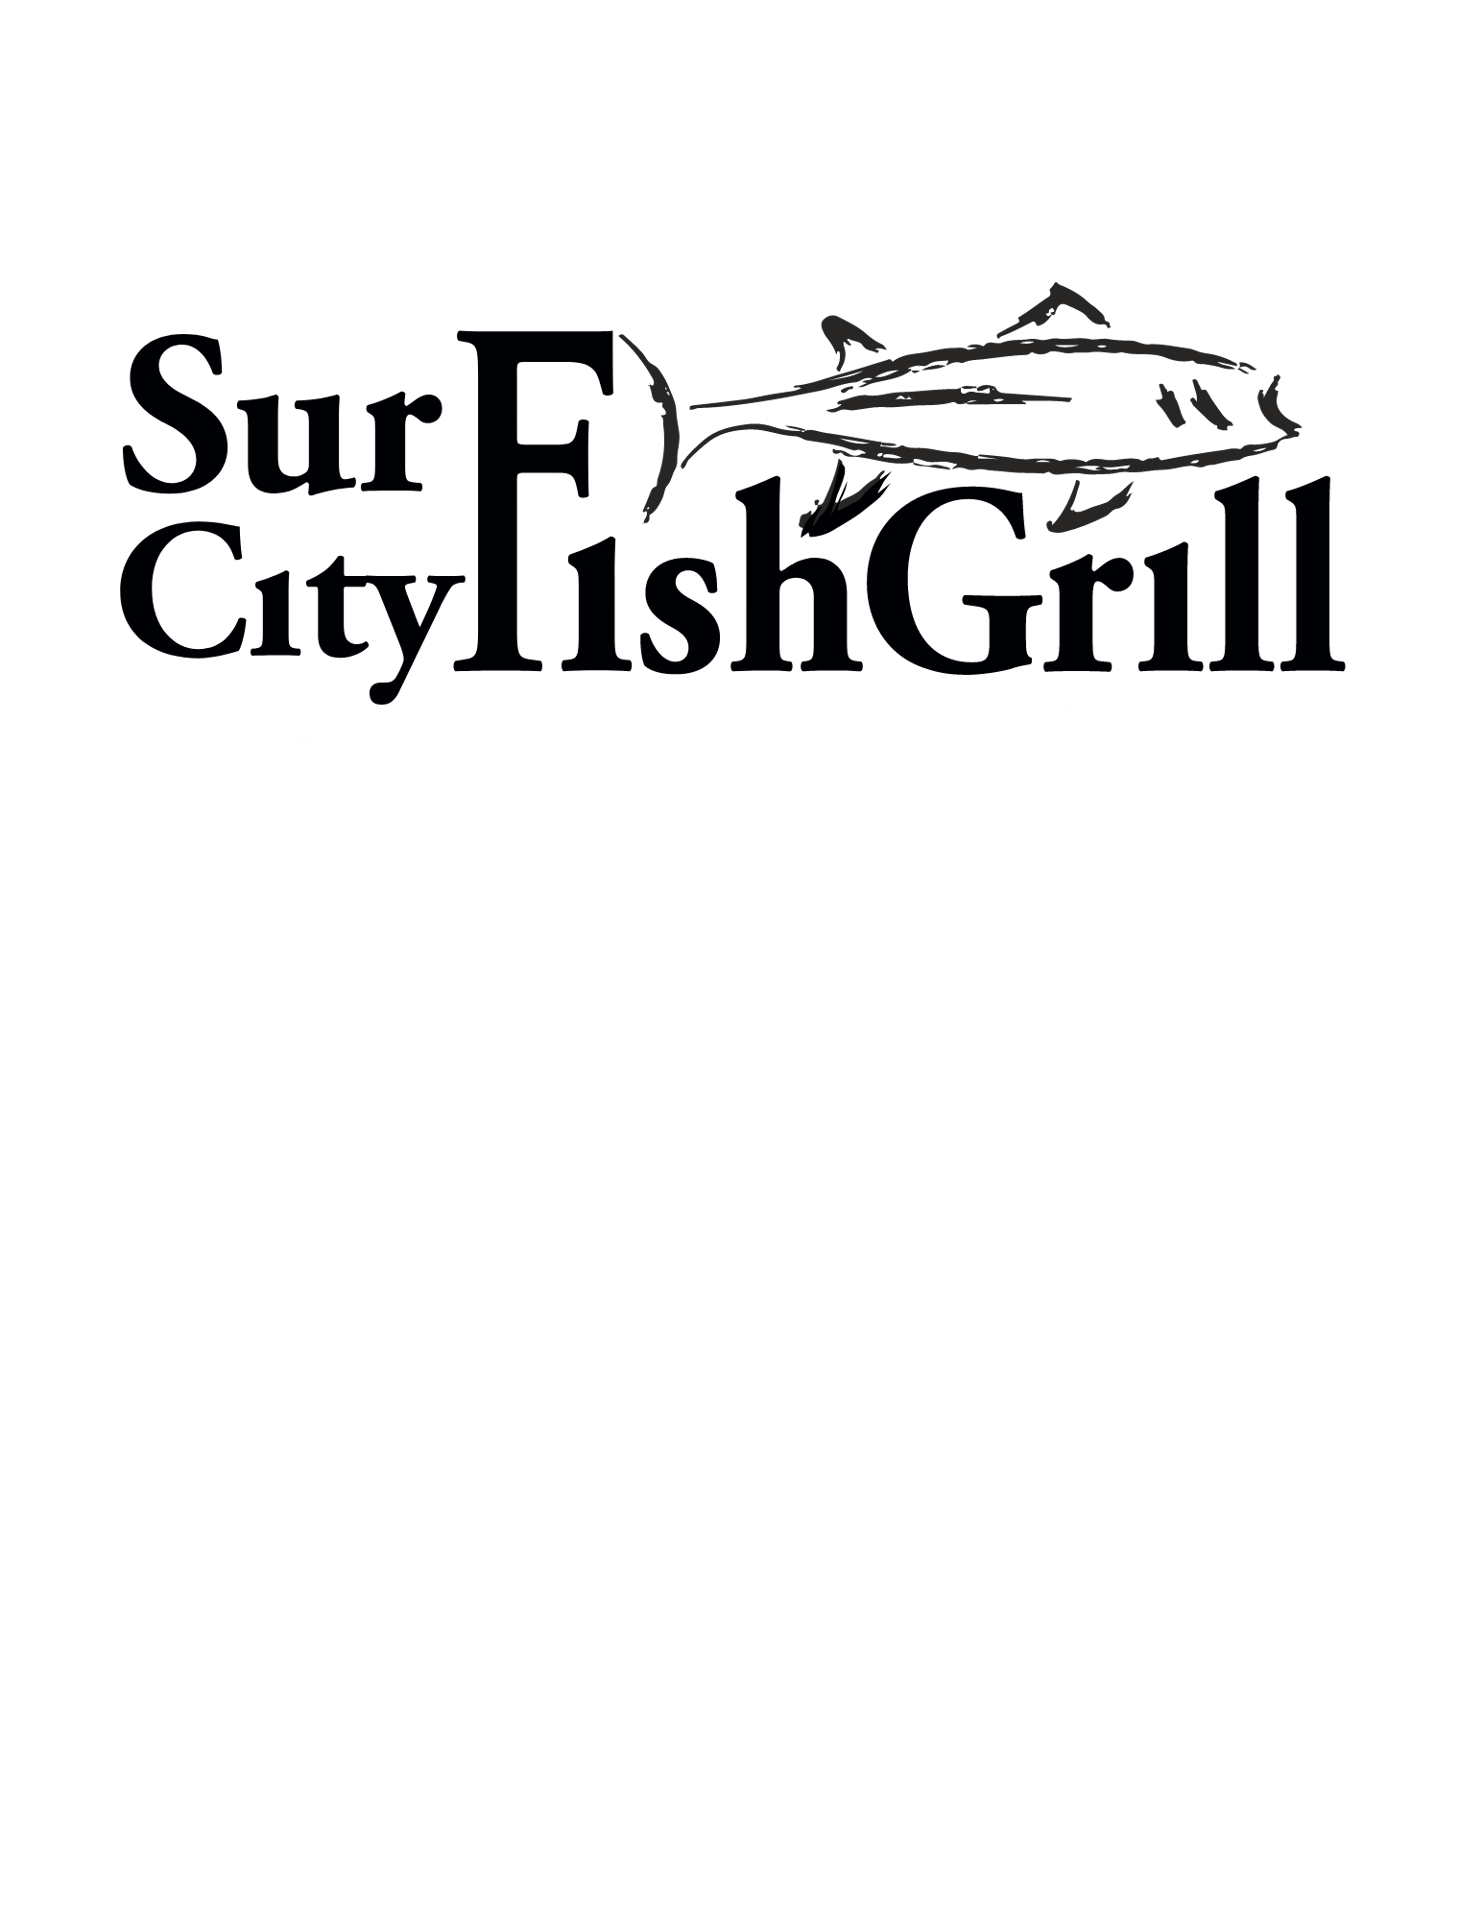 Surf City Fish Grill 